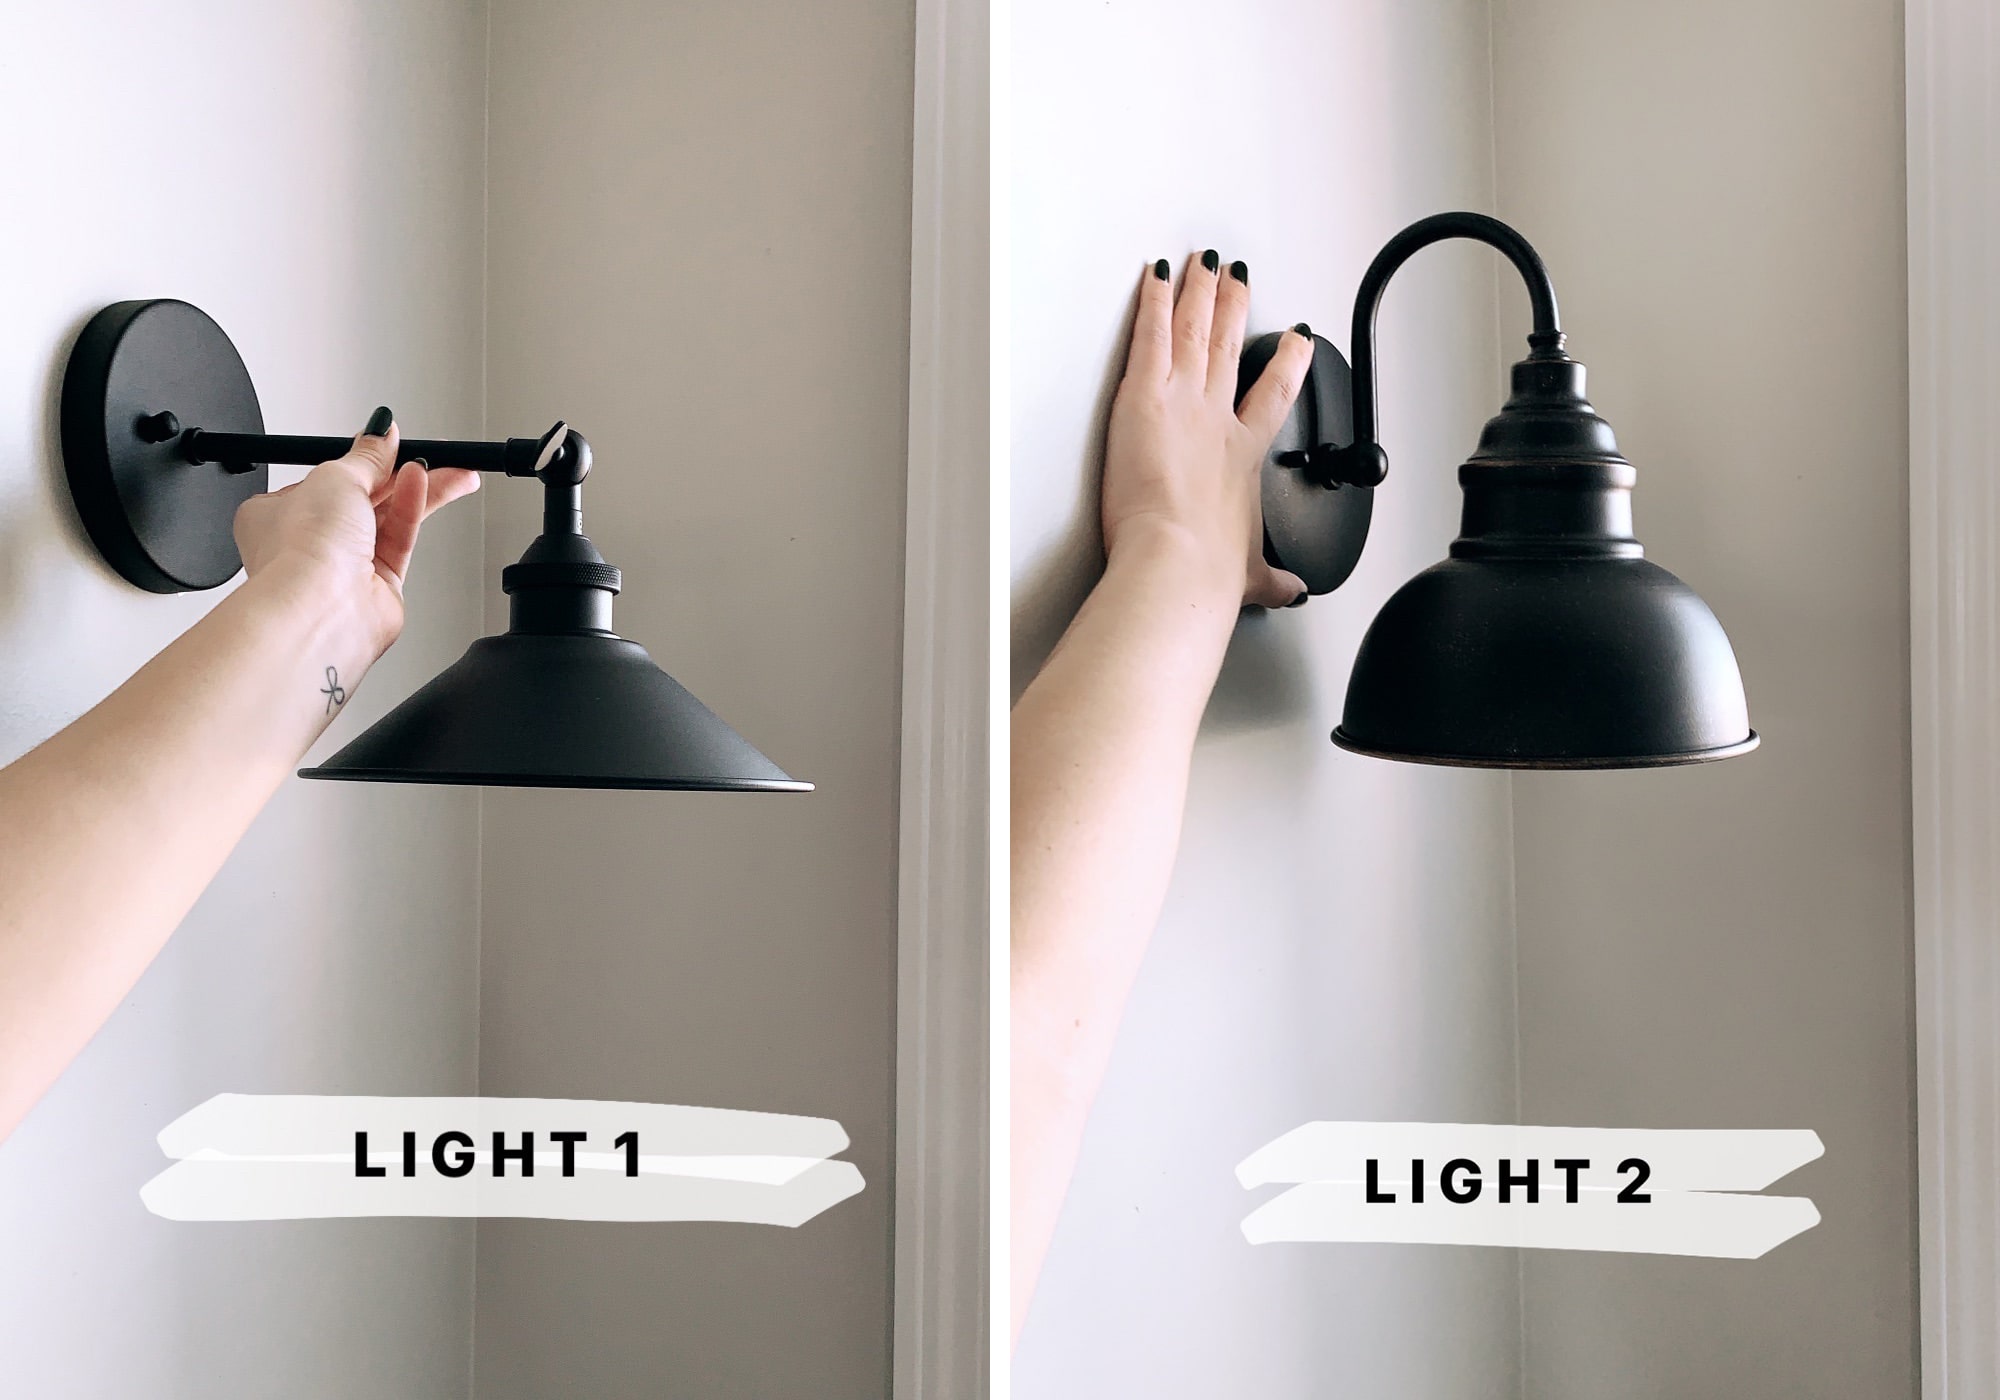 Choosing between light 1 and light 2 styles